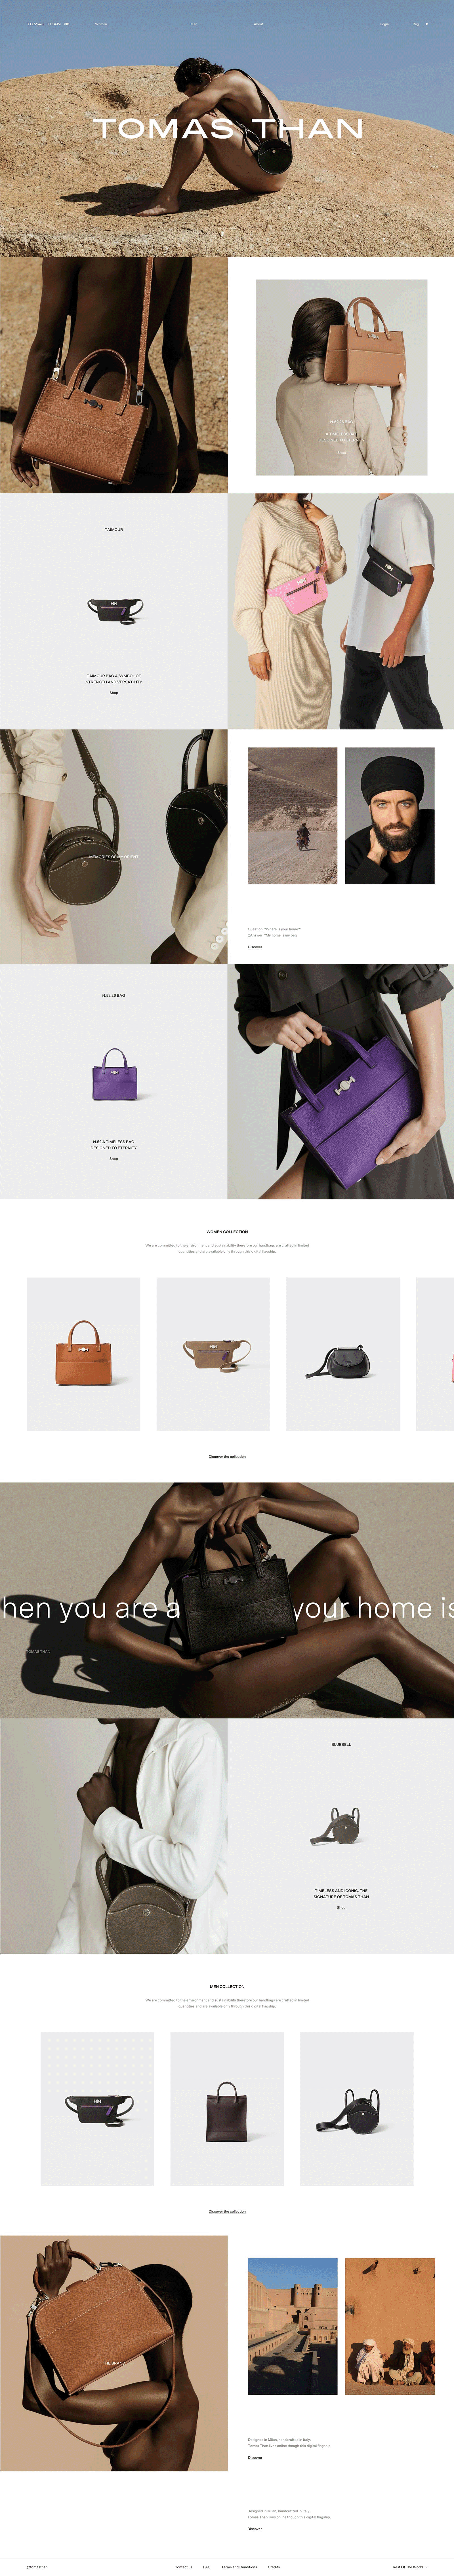 Tomas Than Bag ecommerce design full site.